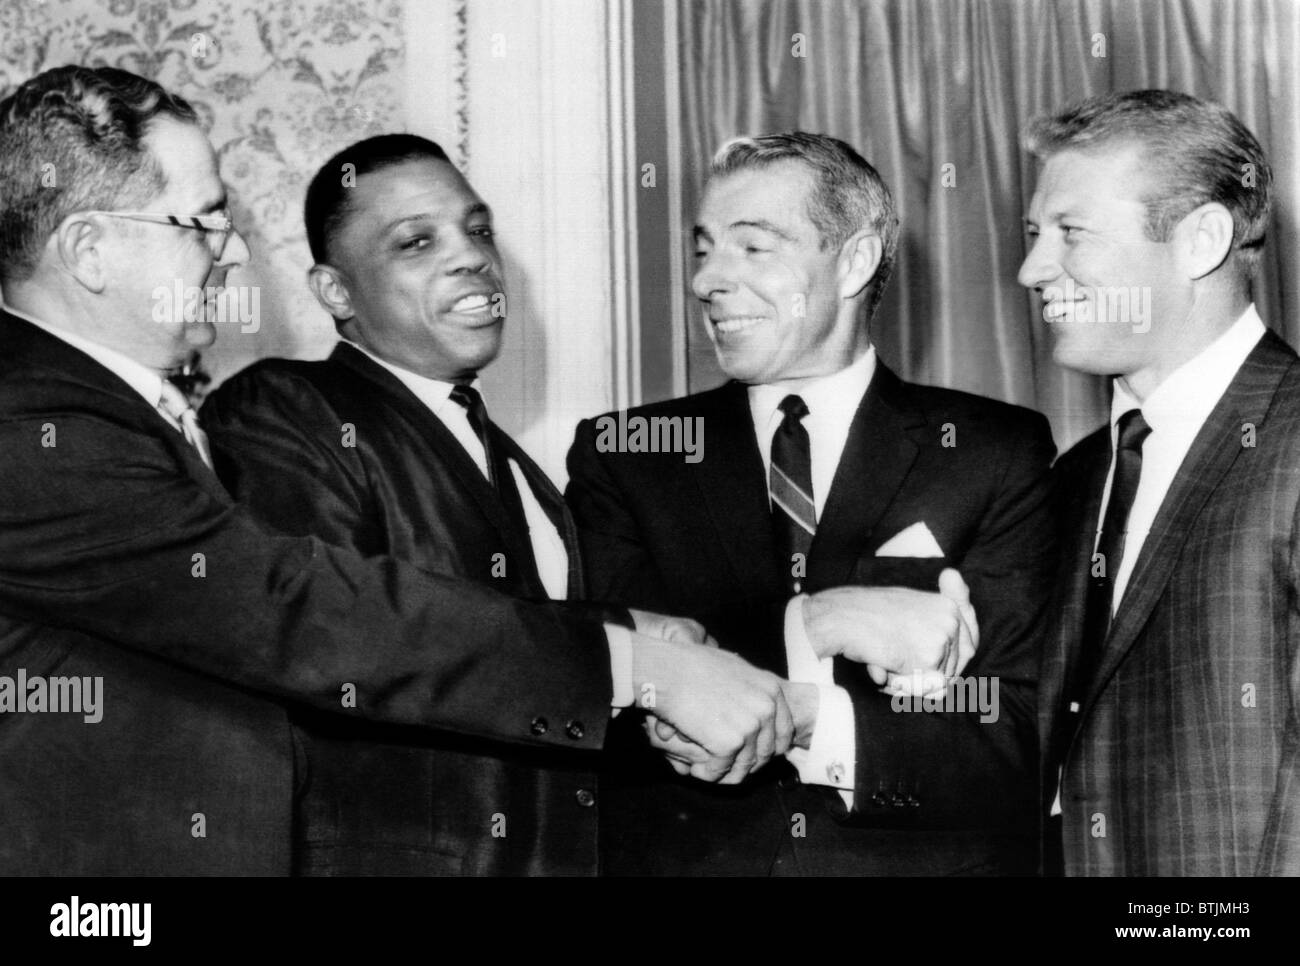 Dominic DiMaggio, Willie Mays, Joe DiMaggio and Mickey Mantle celebrate Joe's 50th birthday, San Francisco, 1964. Courtesy: CSU Stock Photo